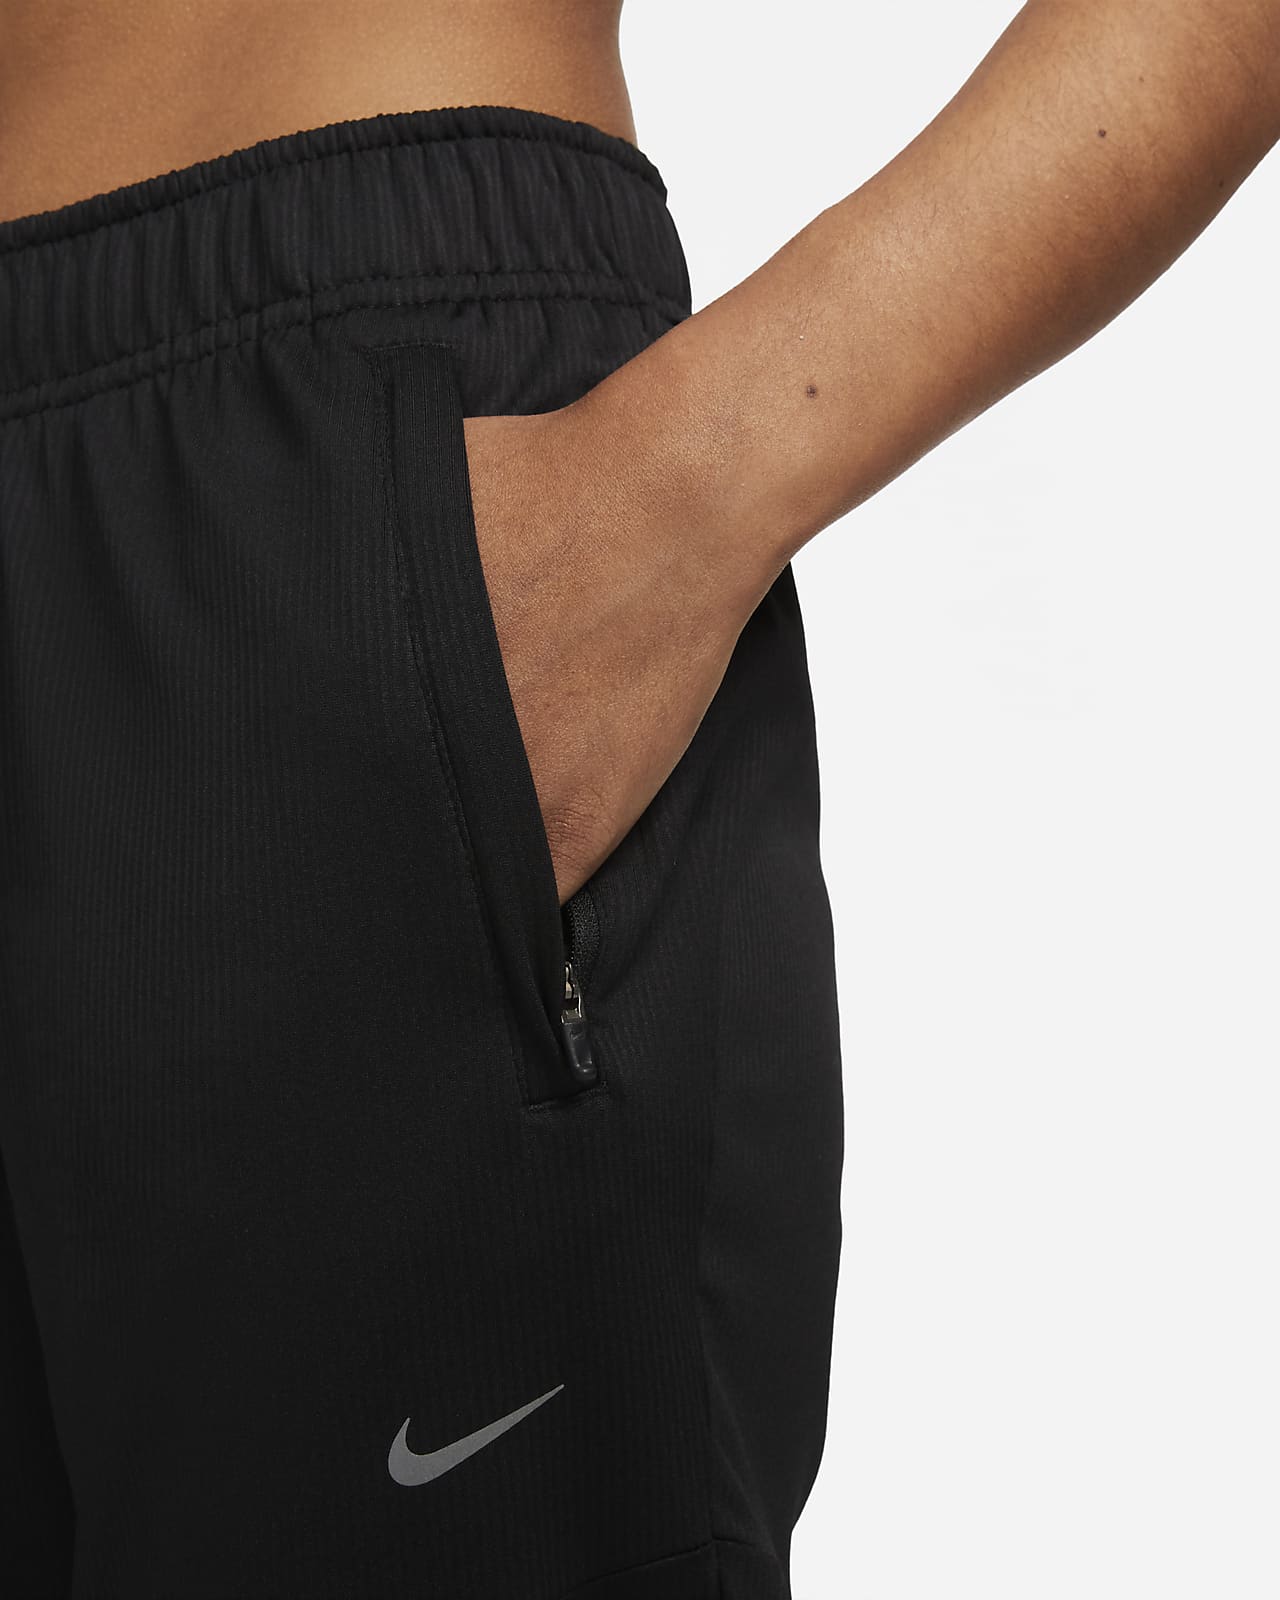 Le meilleur pantalon de running Nike. Nike LU